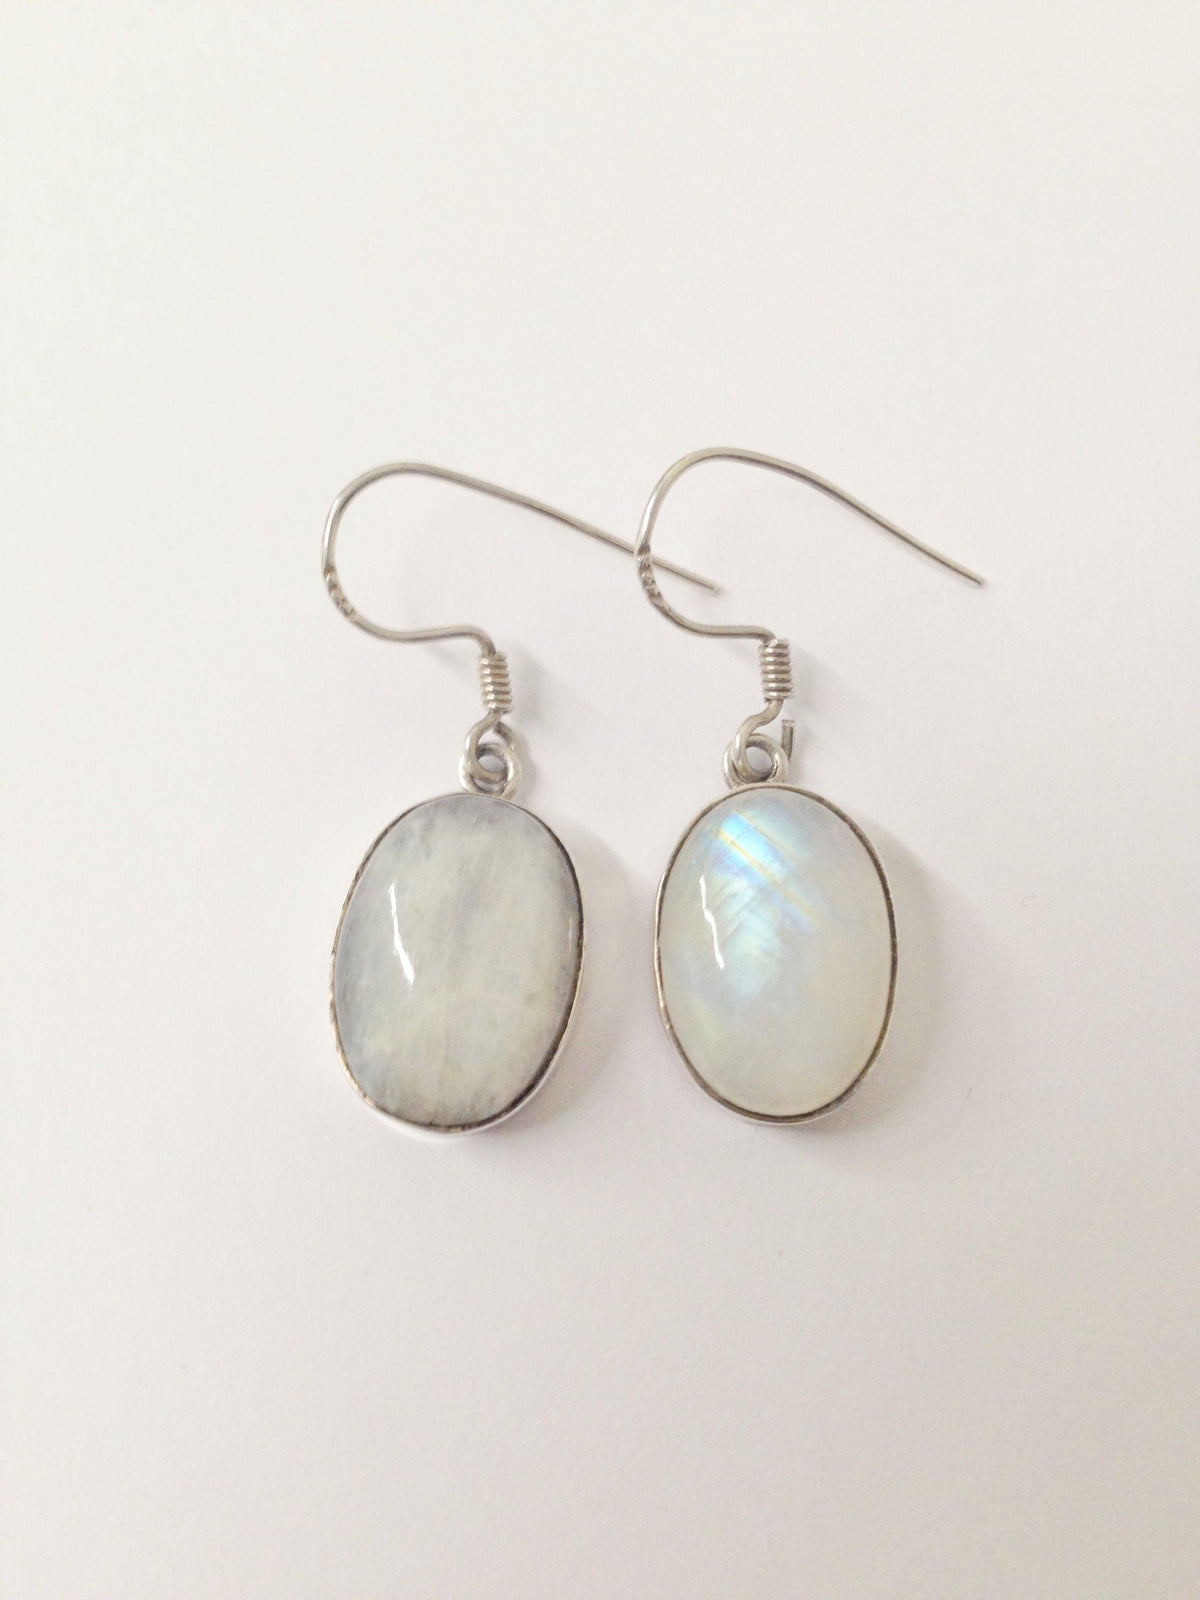 Moonstone .925 Sterling Silver Earrings - Hers and His Treasures